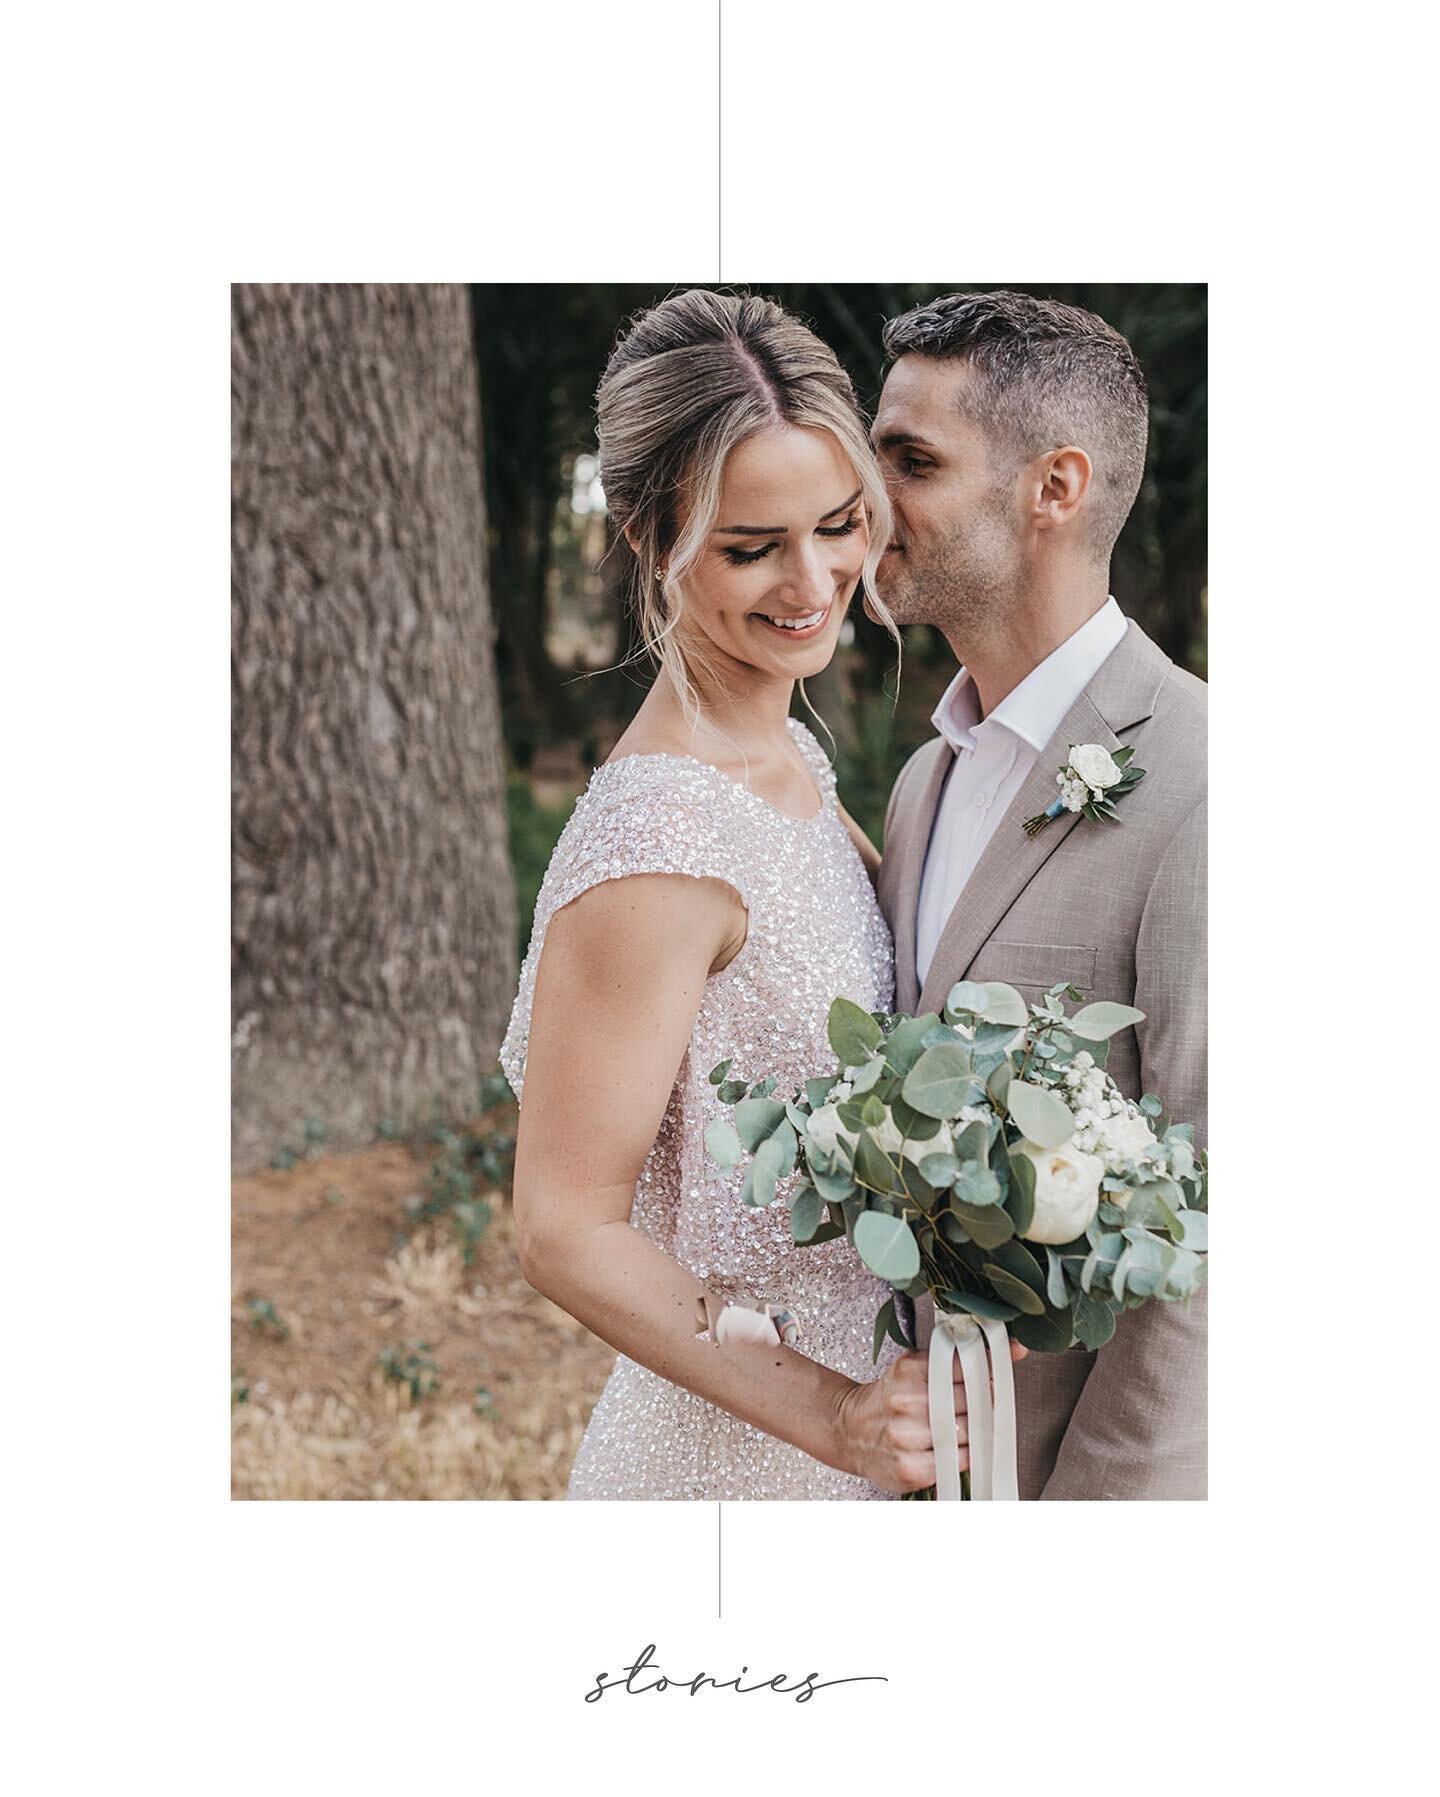 .
_T&amp;O_

@parcsama 
@calblayevents 
@annacampbellbridal 
@thevisualpartners 

#visual_stories&nbsp;#tvp_stories
#weddingphotography&nbsp;#tarragona
#catalunyawedding&nbsp;#stories